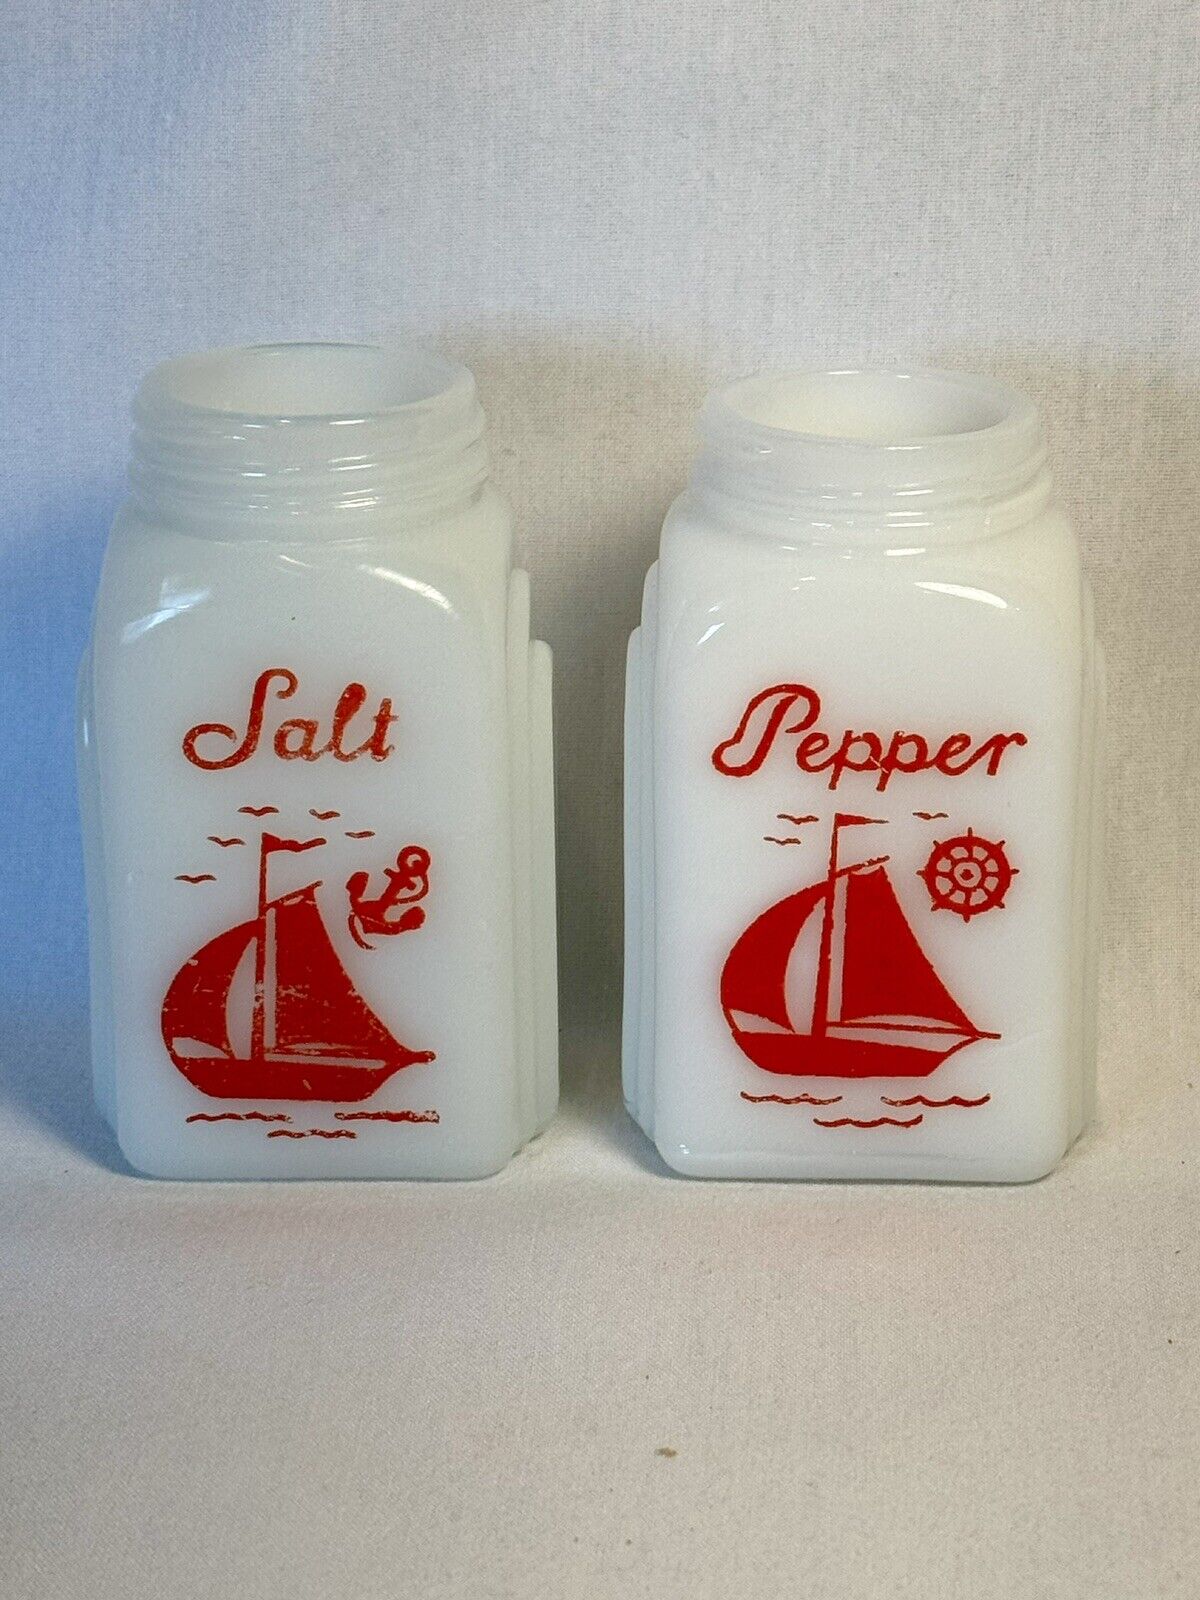 McKee Roman Arched Red Sailboat White Milk Glass Salt & Pepper Shaker Set